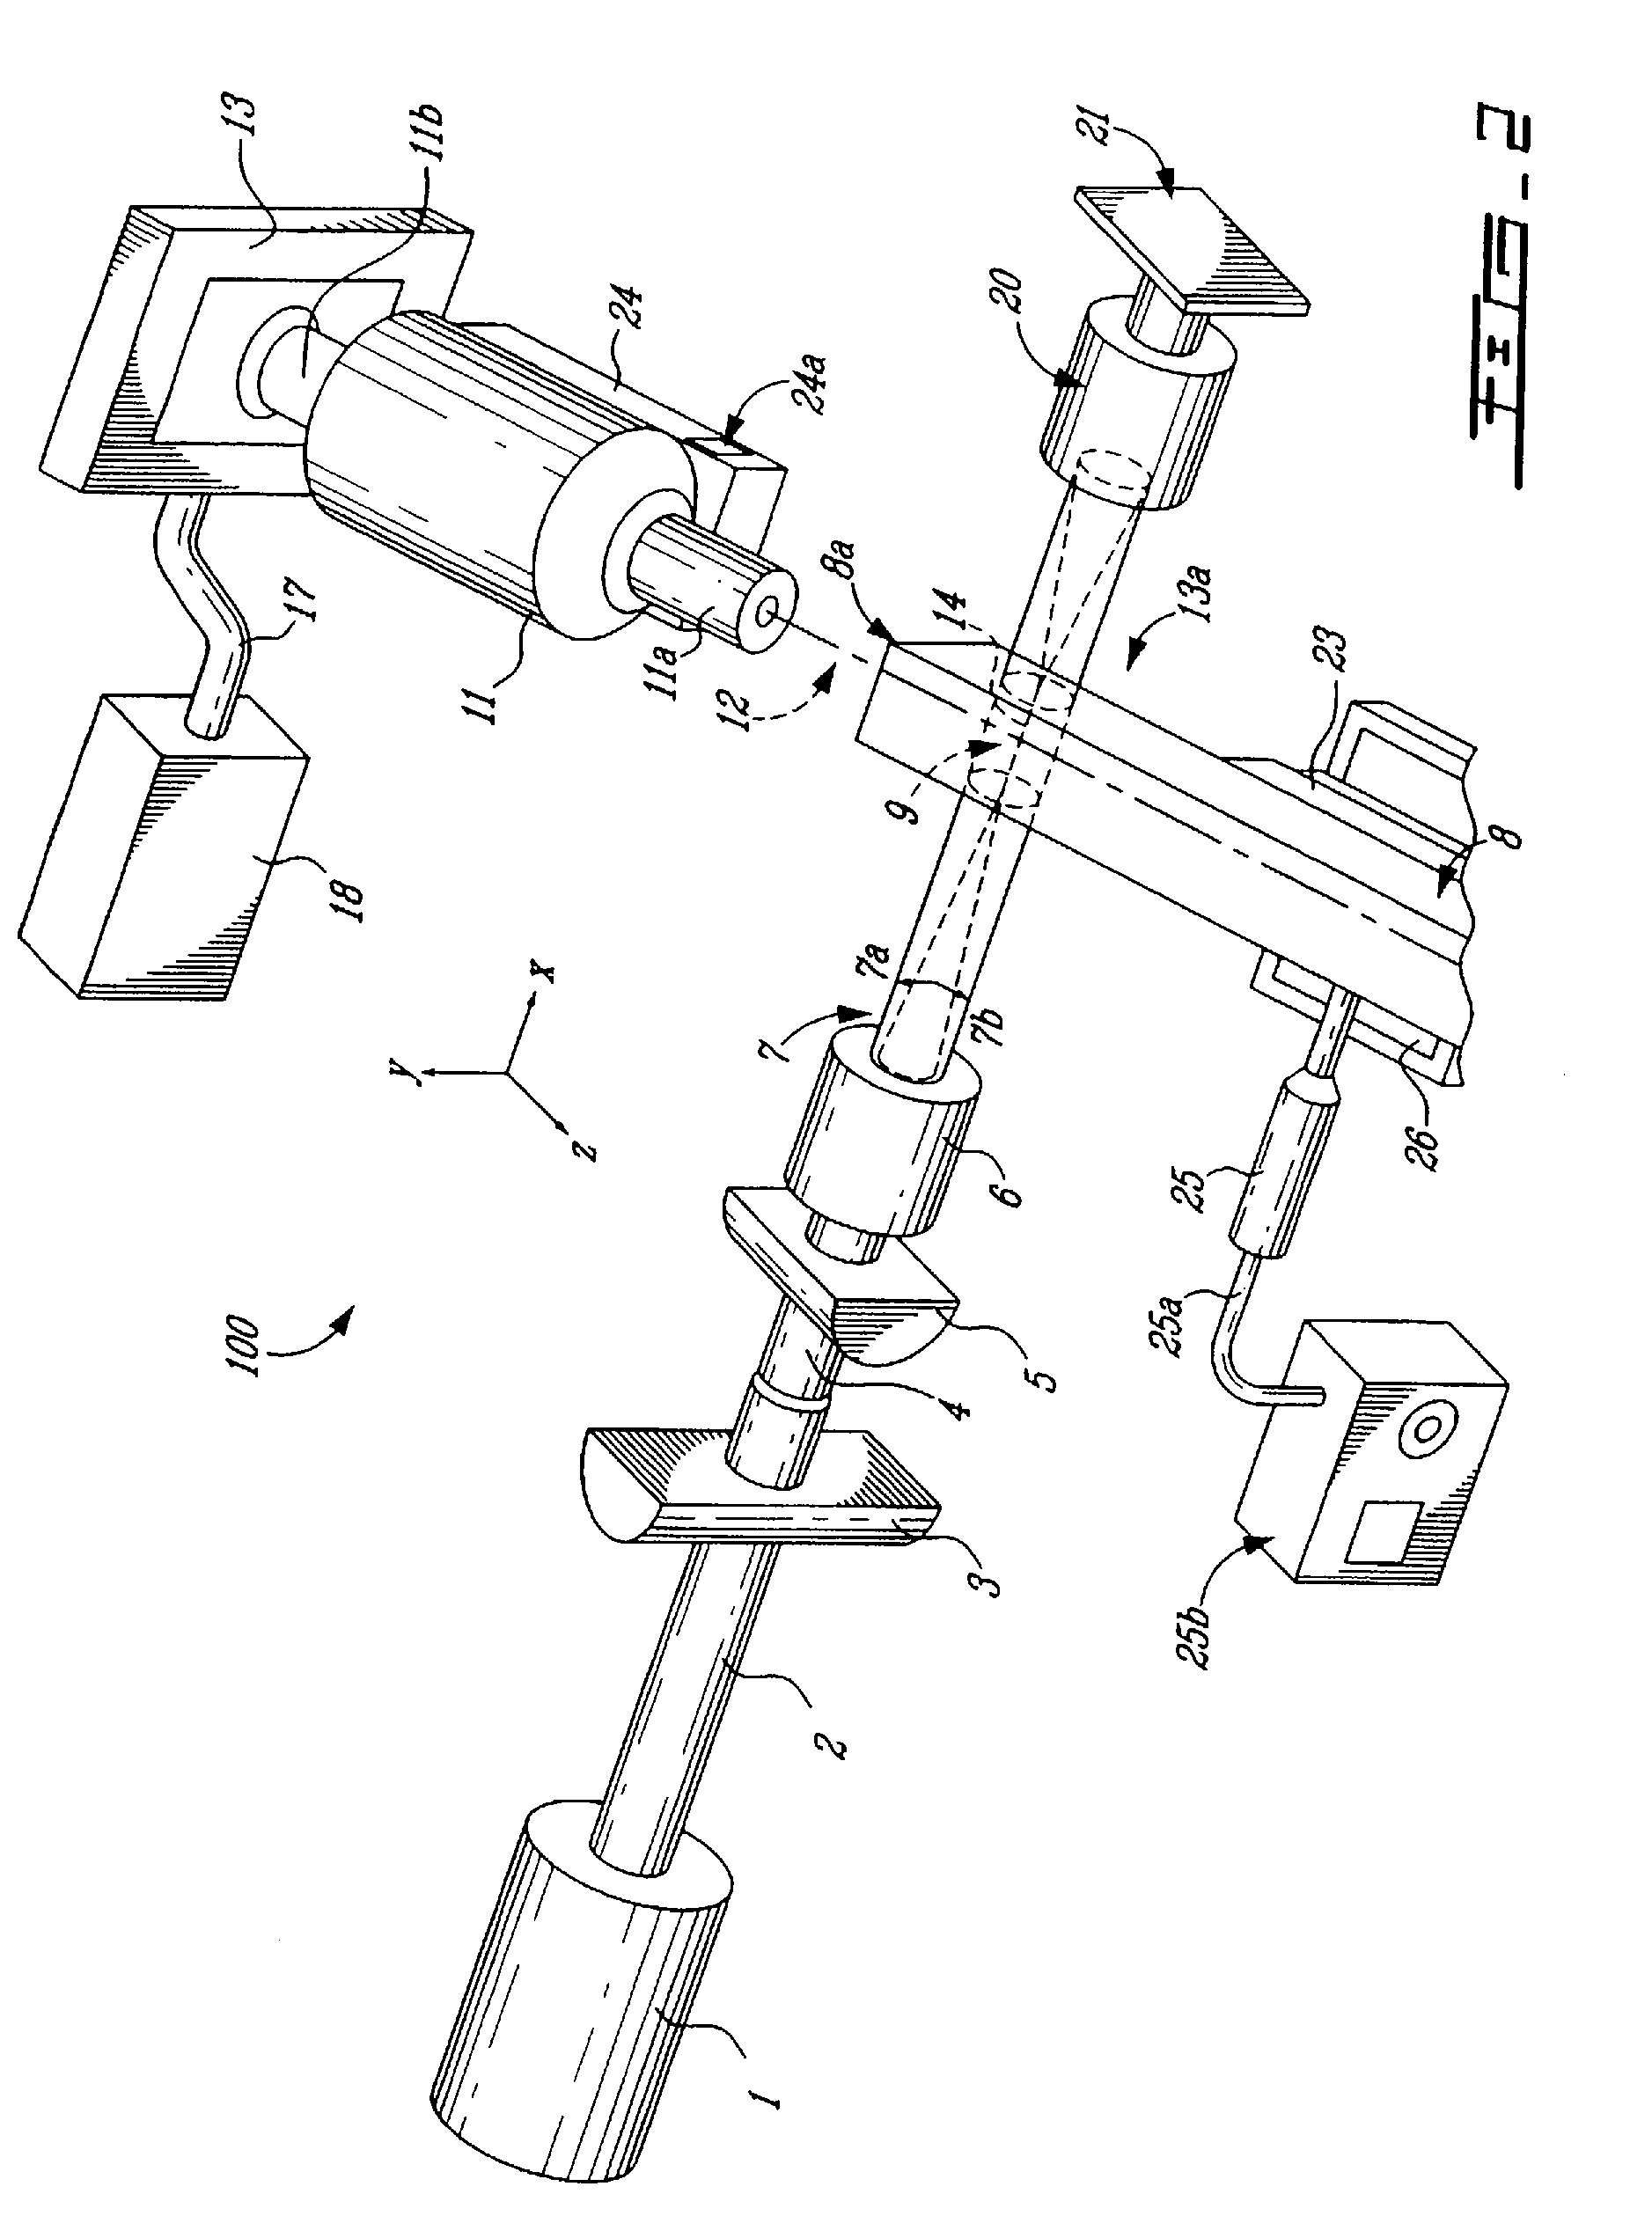 Light profile microscopy apparatus and method